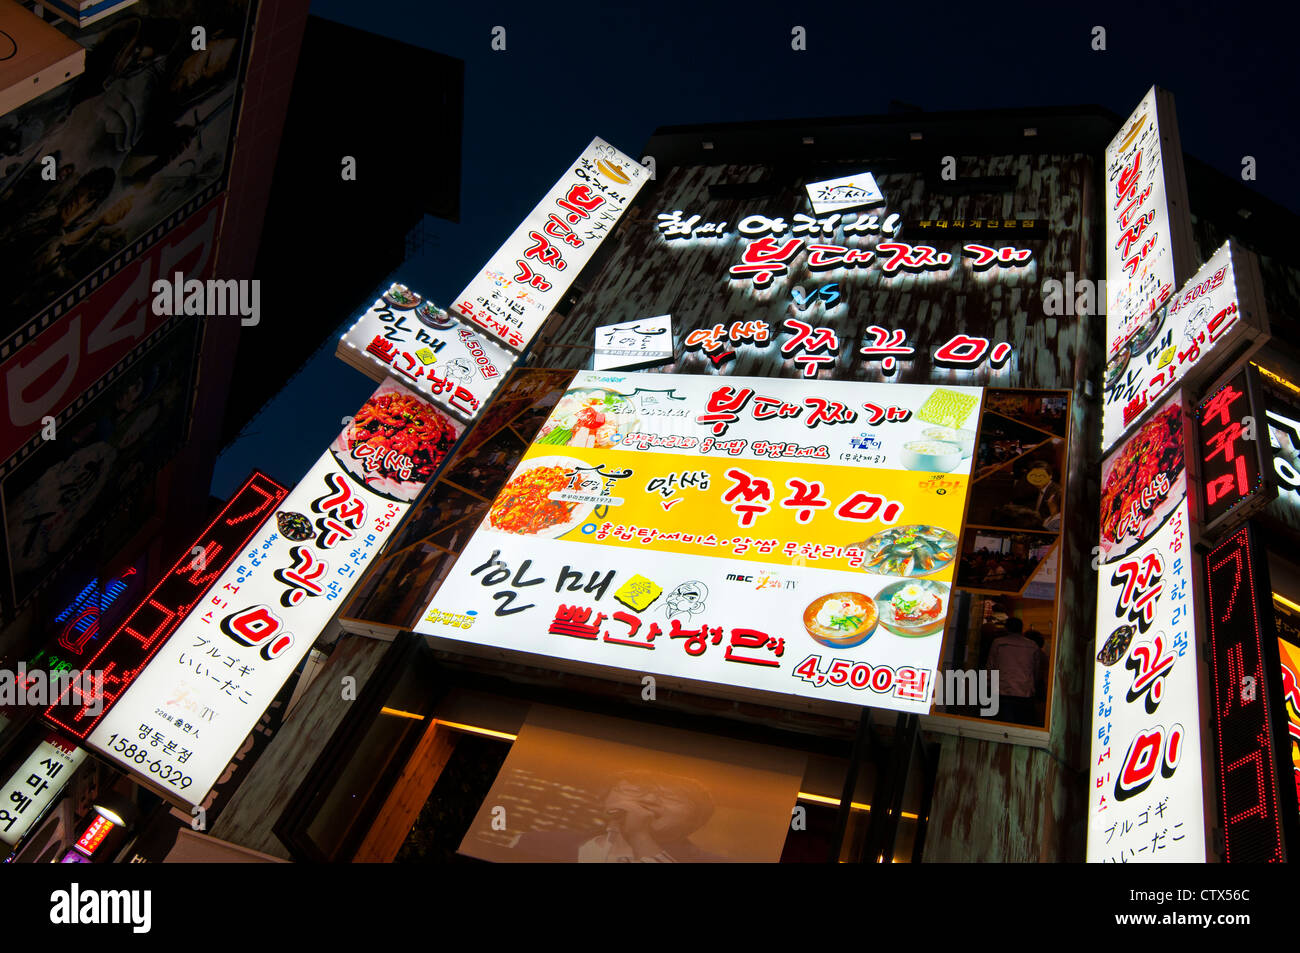 Chaotic display of restaurants signs at night, Myeongdong, Seoul, Korea Stock Photo